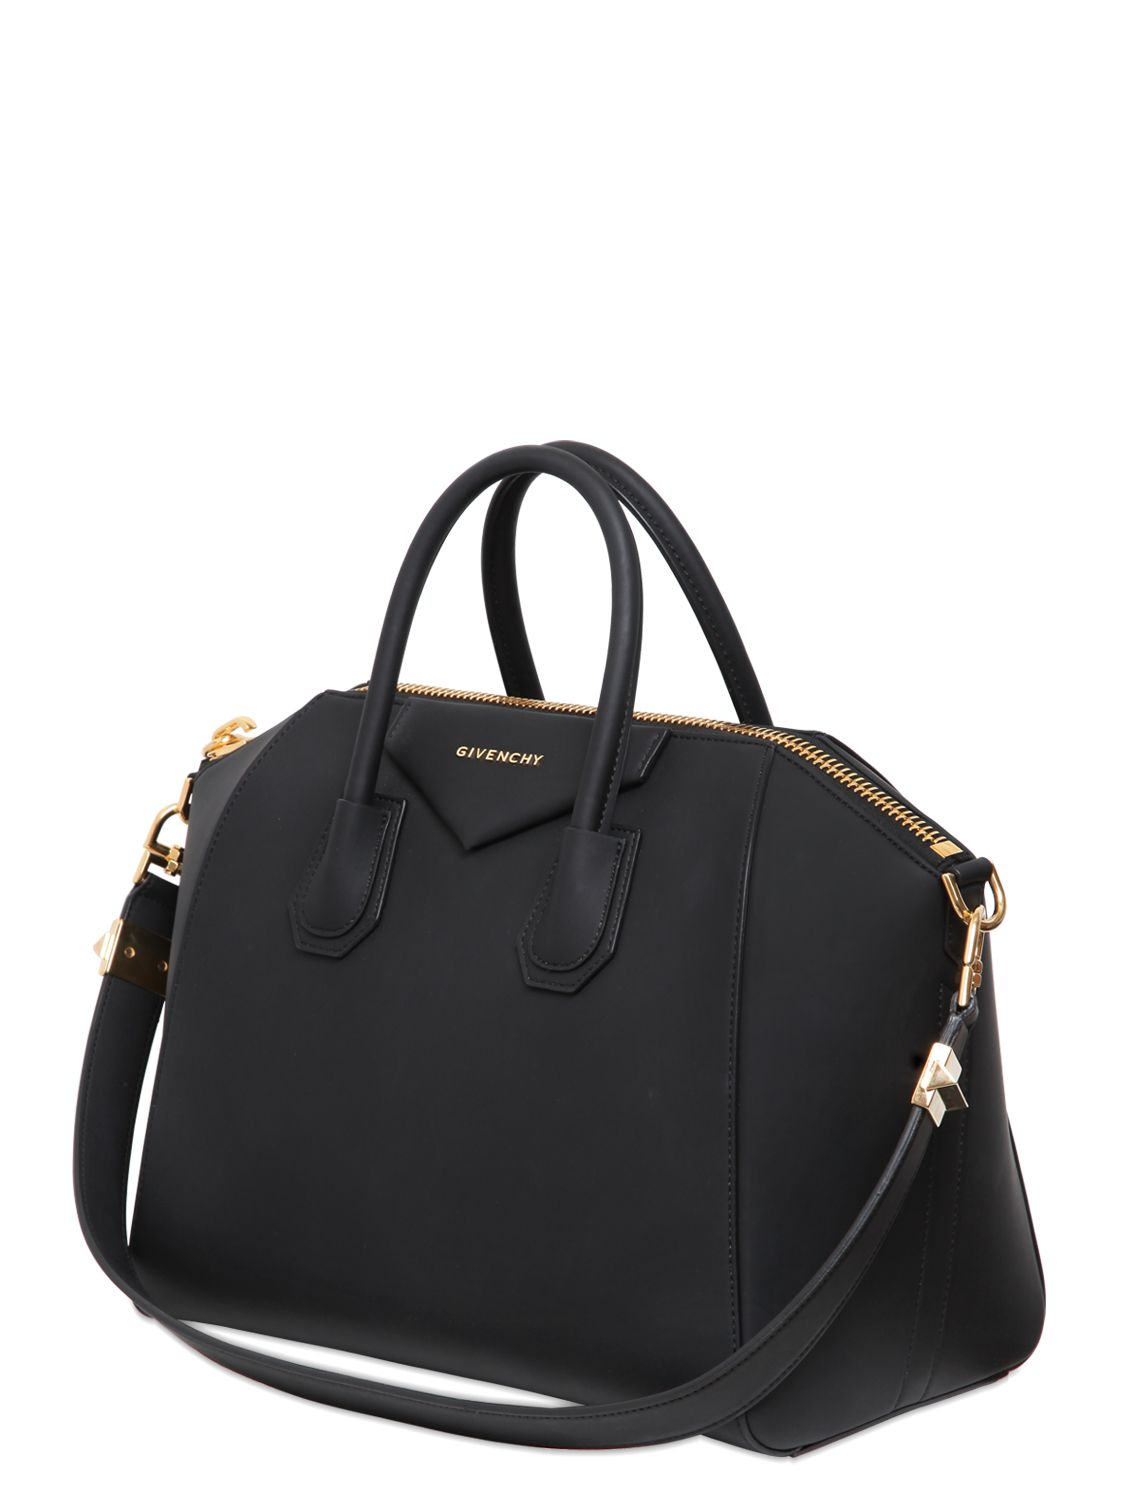 Givenchy Medium Antigona Rubber Effect Bag in Black - Lyst